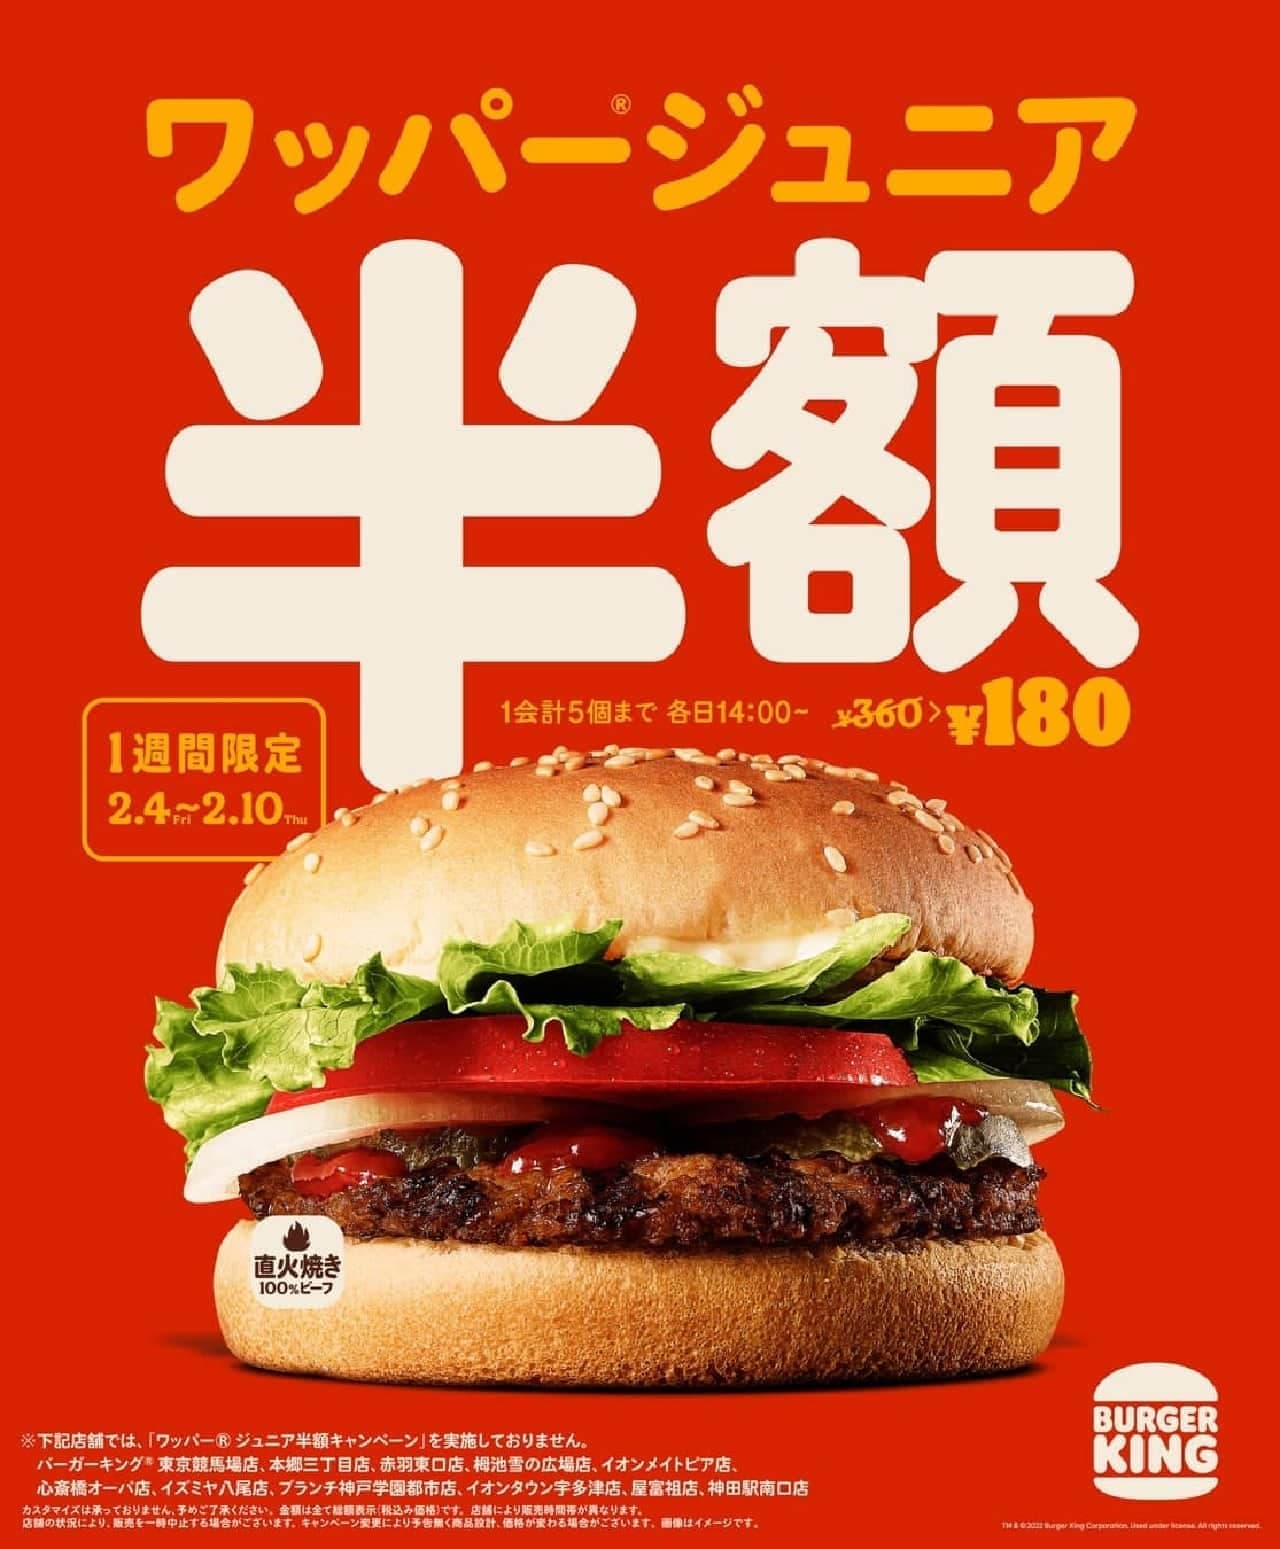 Burger King "Whopper Junior Half Price Campaign"